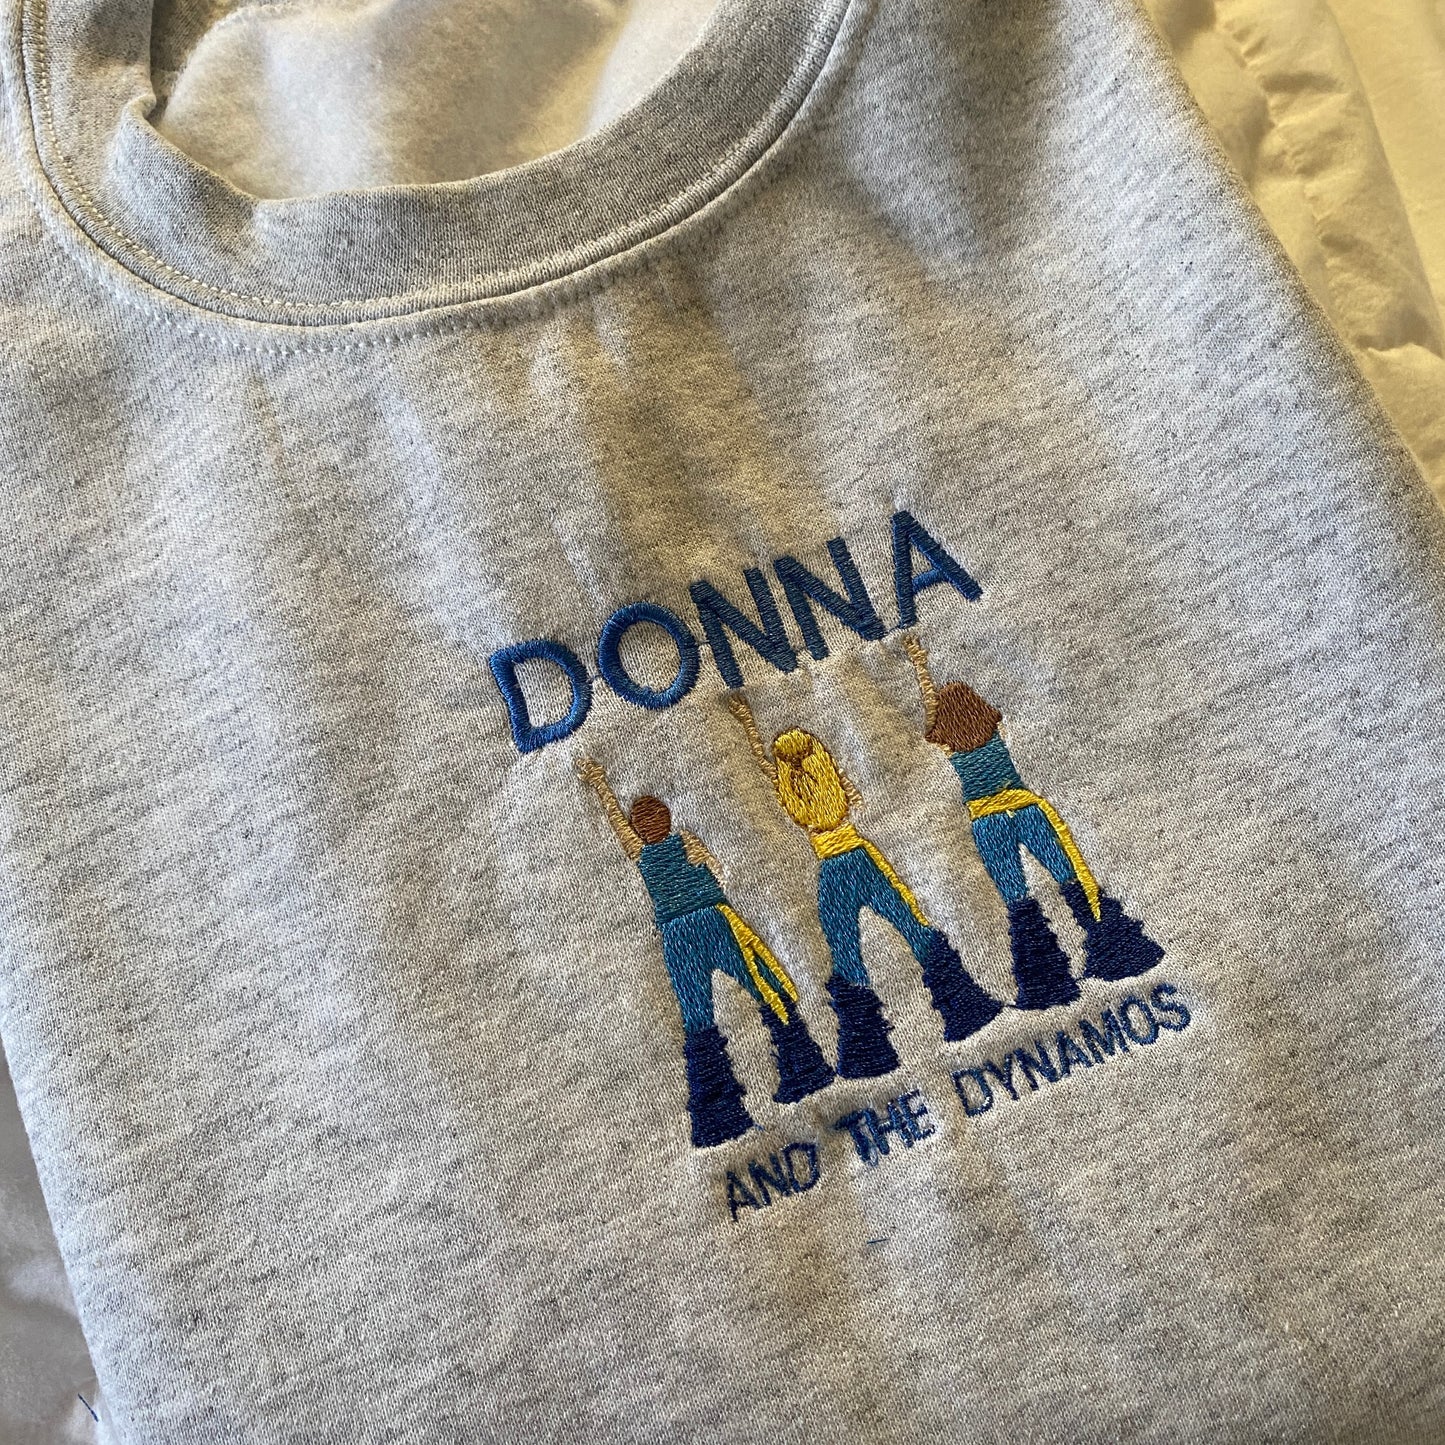 Donna and the dynamos sweatshirt - Large Grey (please read description)